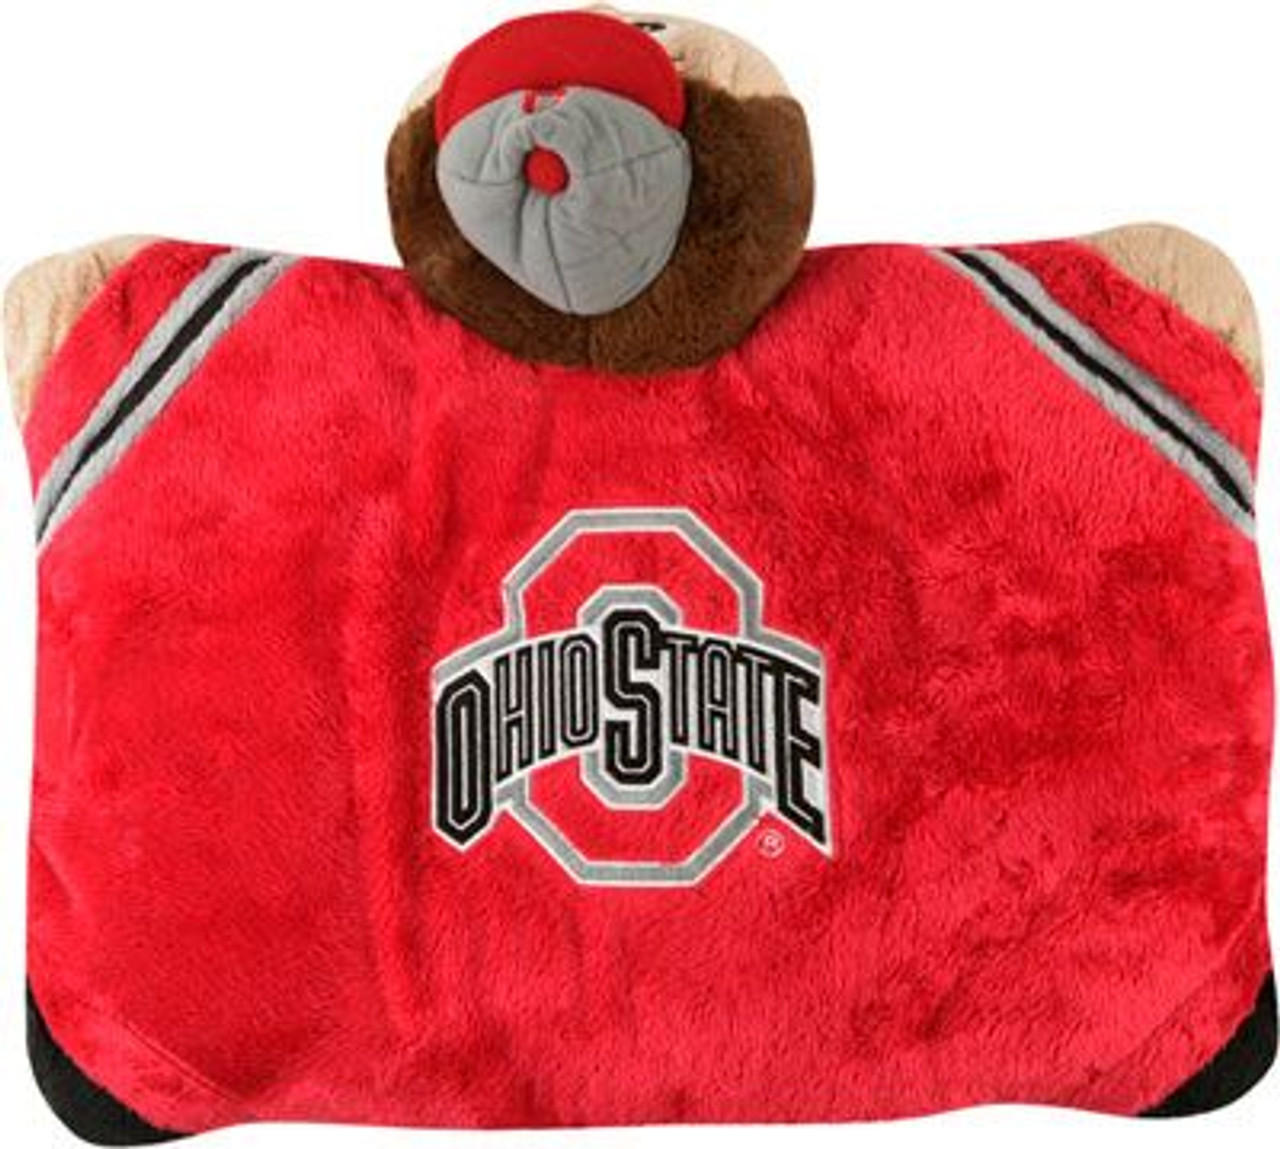 Ohio State Buckeyes Pillow Pet